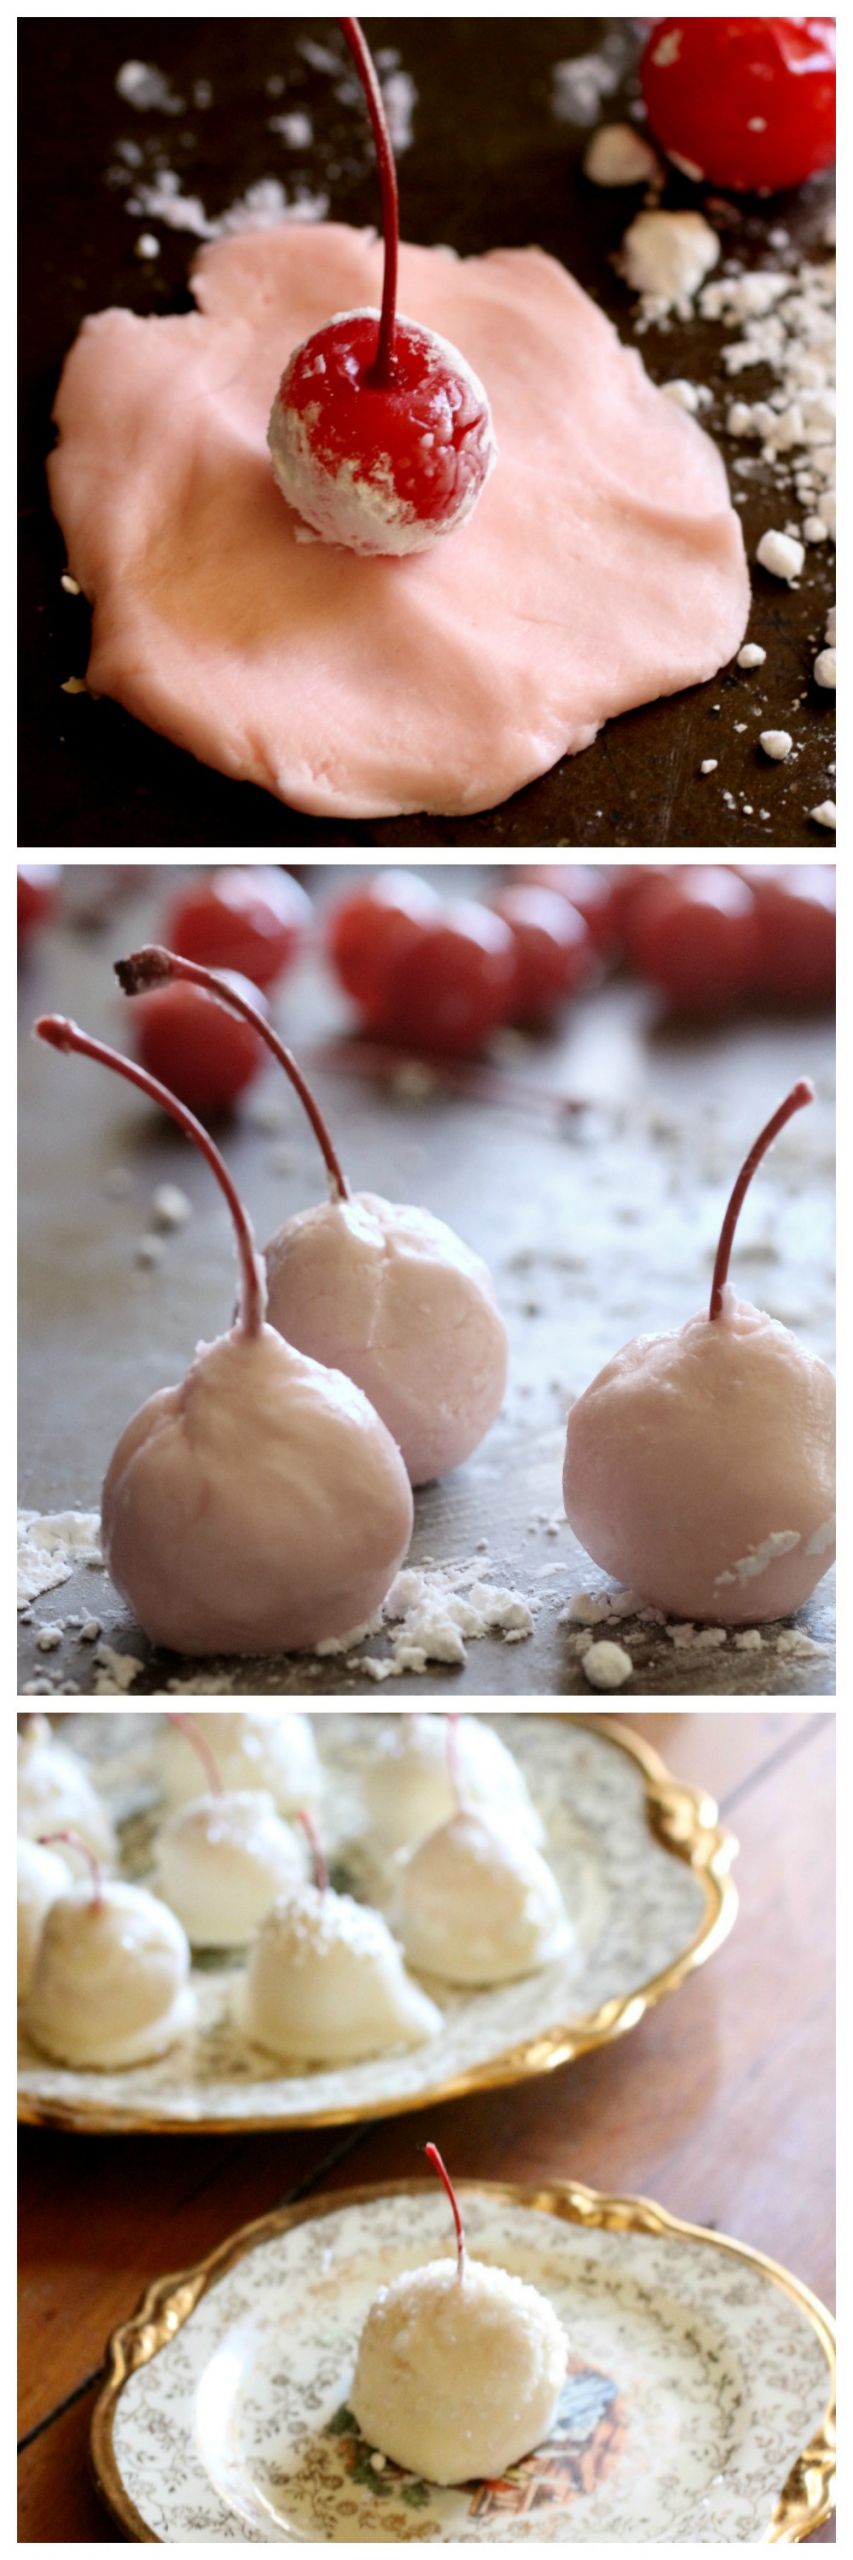 Chocolate Covered Cherry Recipes
 White Chocolate Covered Cherries